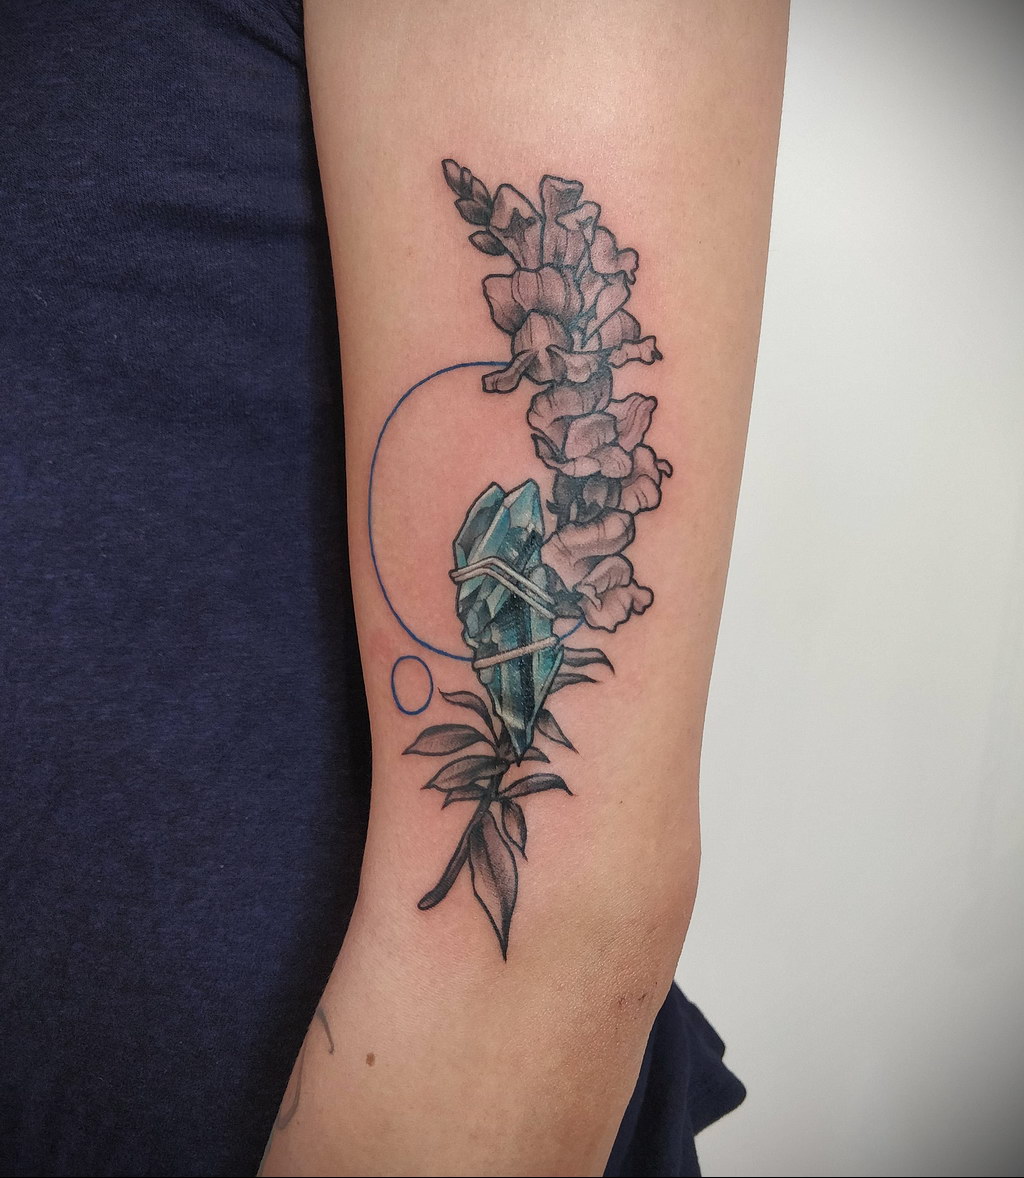 Tattoo tagged with flower small fraukekatze micro tiny snapdragon  ifttt little nature blackwork inner forearm illustrative   inkedappcom